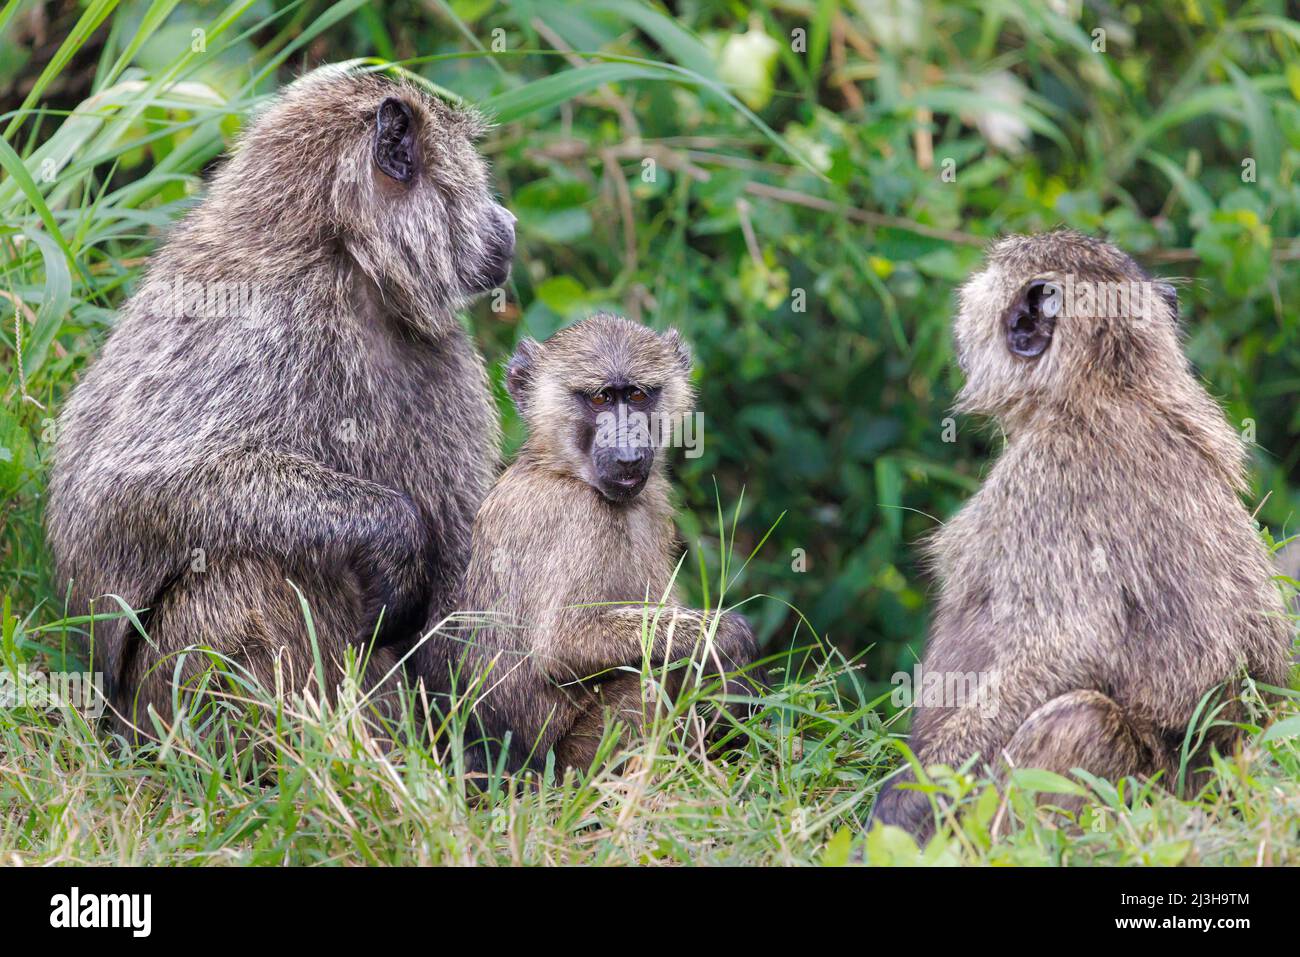 Uganda, Rubirizi district, Katunguru, Queen Elizabeth National Park, baboon Stock Photo